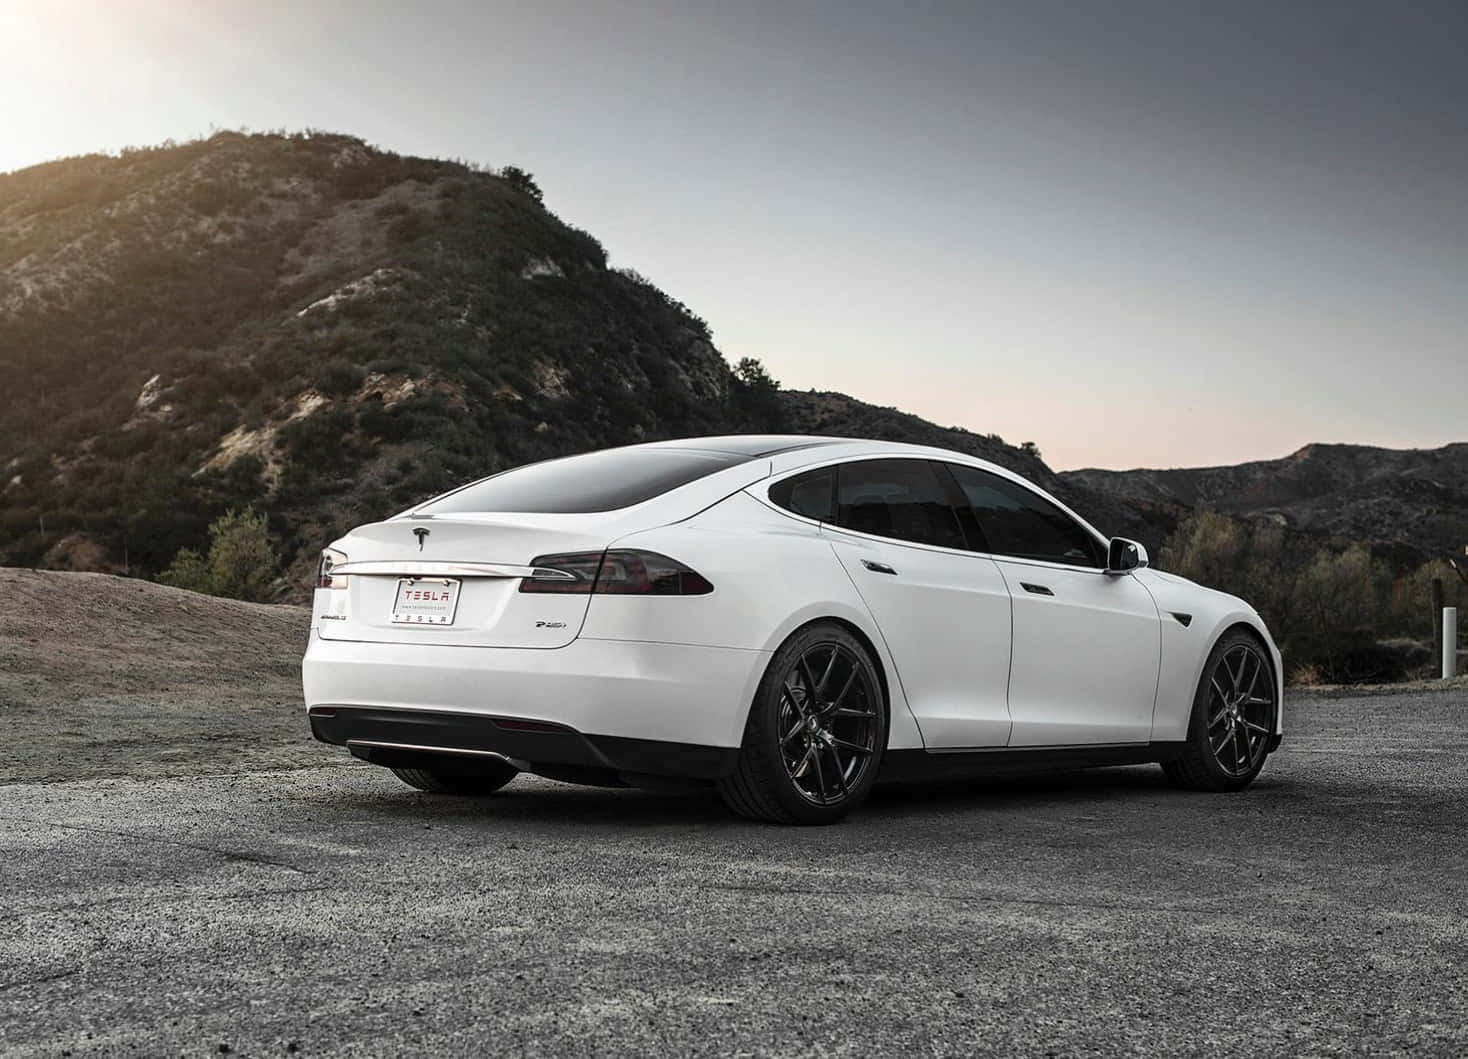 The Tesla Model 3, Your Premium Electric Vehicle